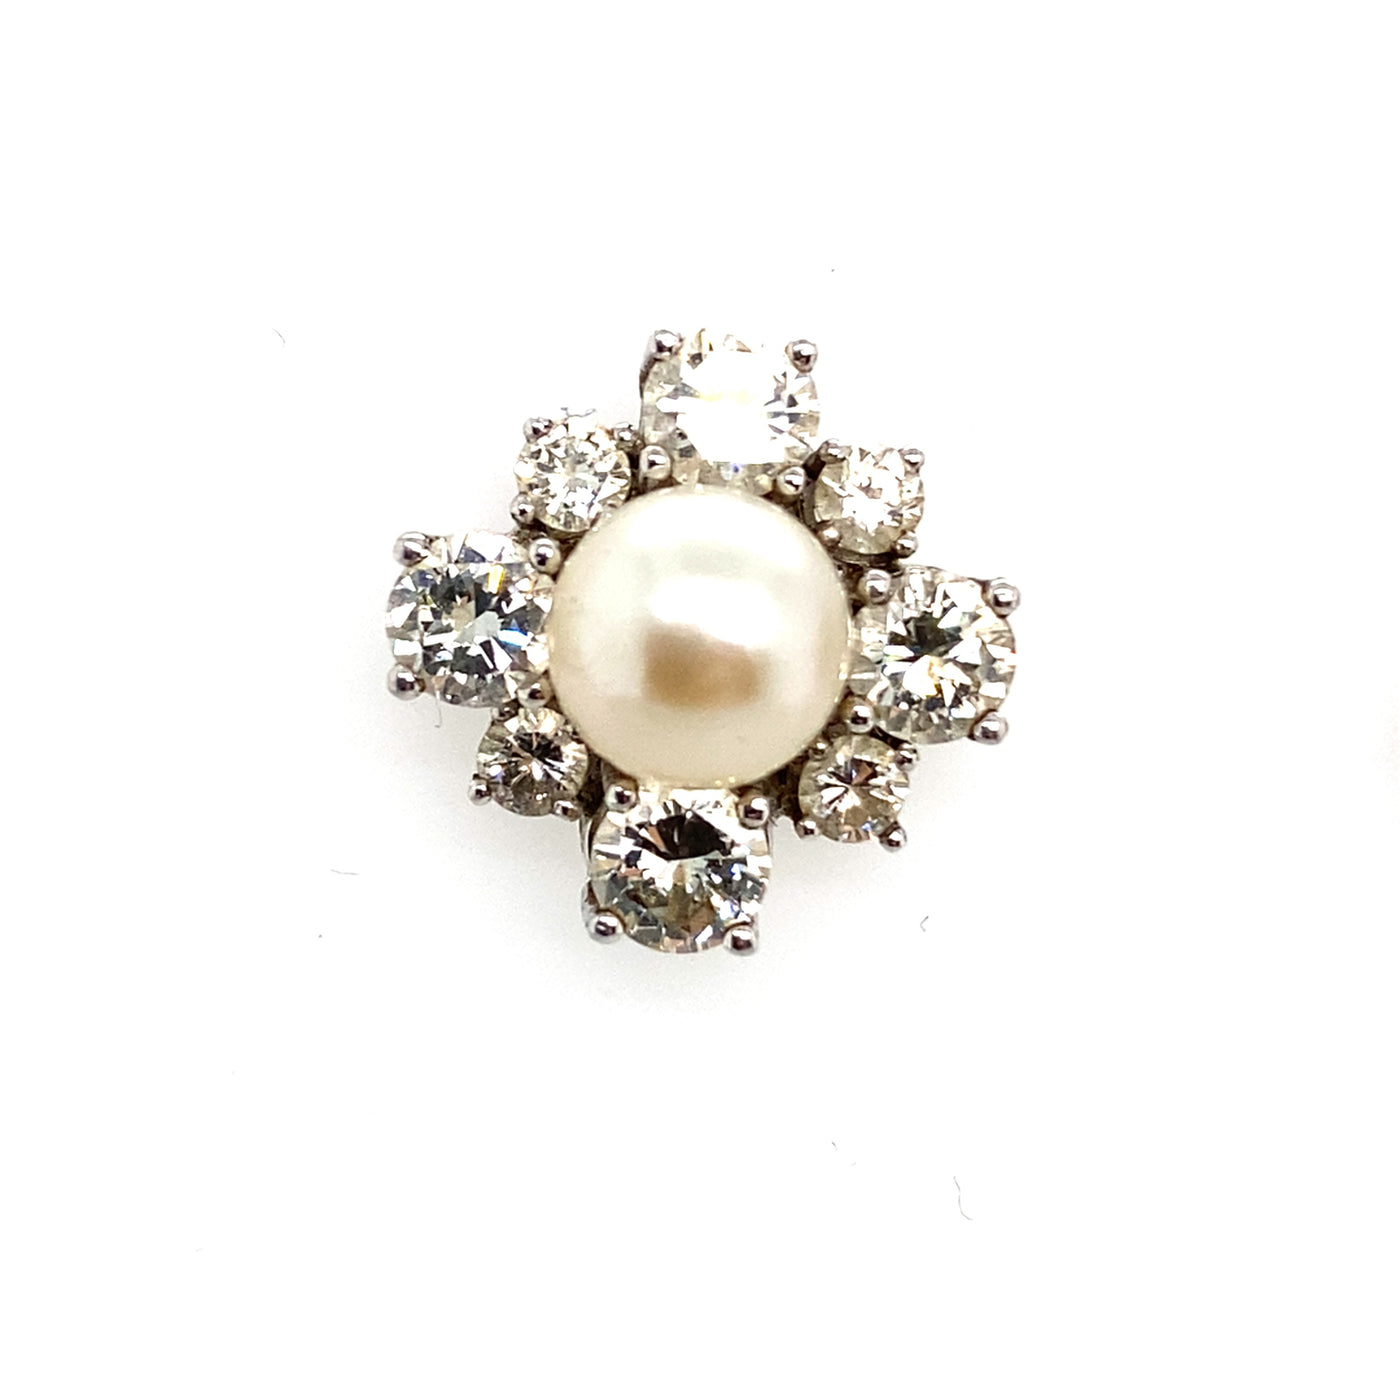 Twice White - Klassische Perlohrringe mit Diamanten